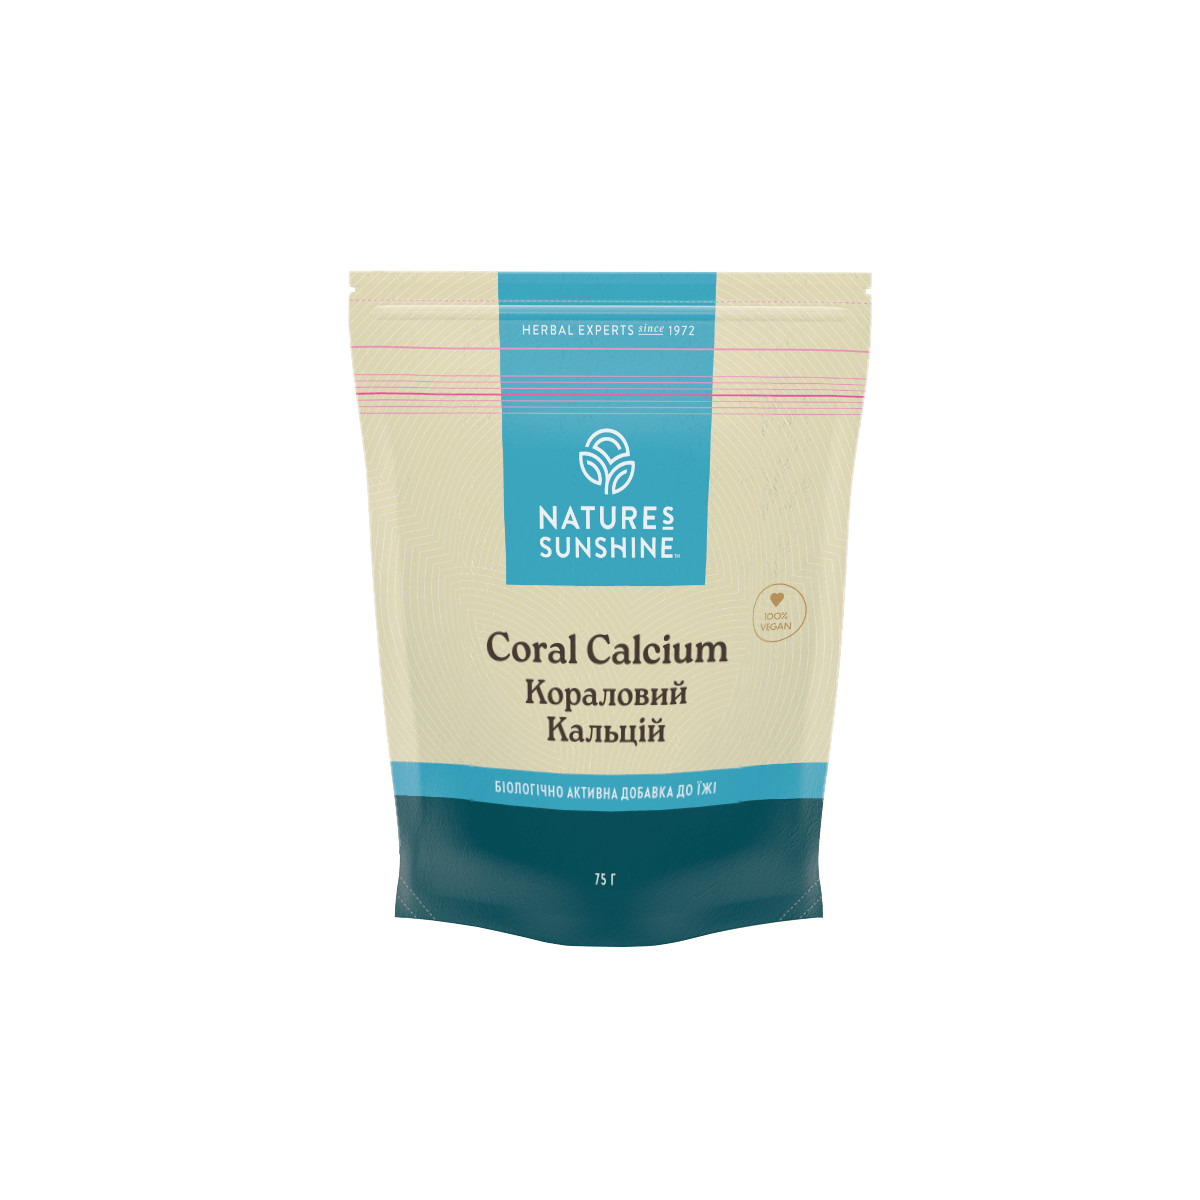 https://nspua.com/product/coral-calcium-korallovyj-kalczij/